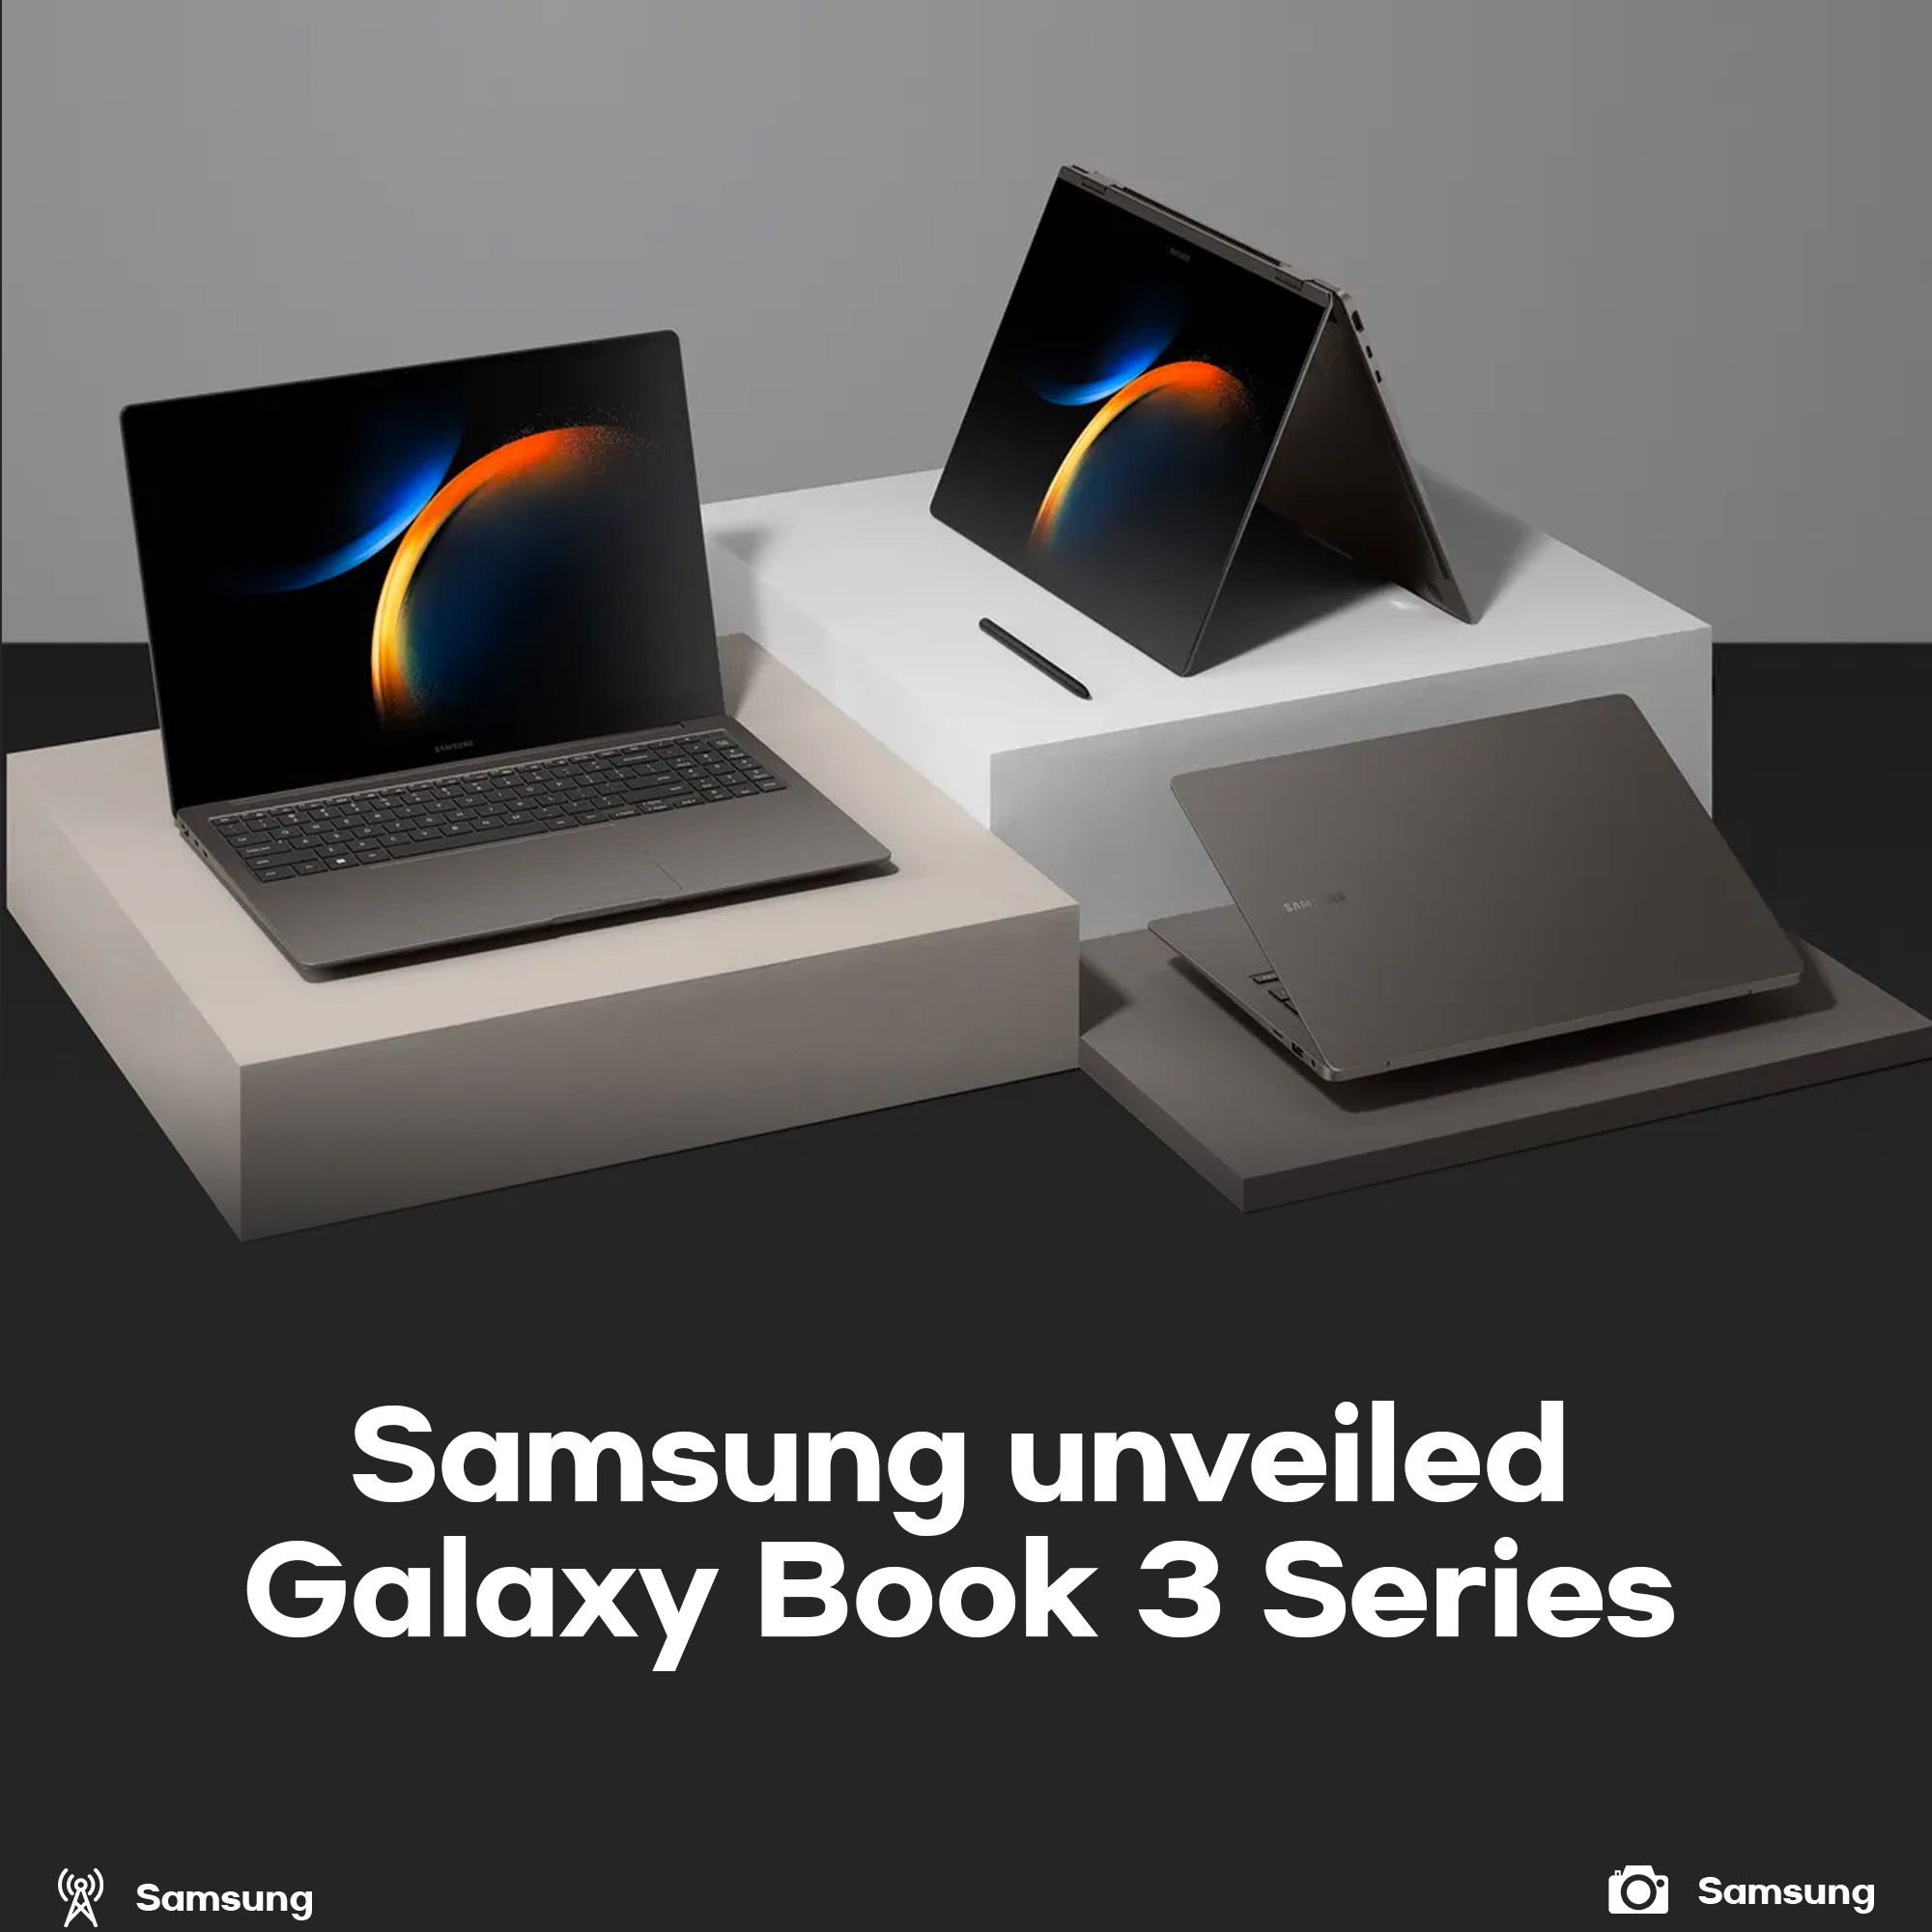 Samsung unveiled Galaxy Book 3